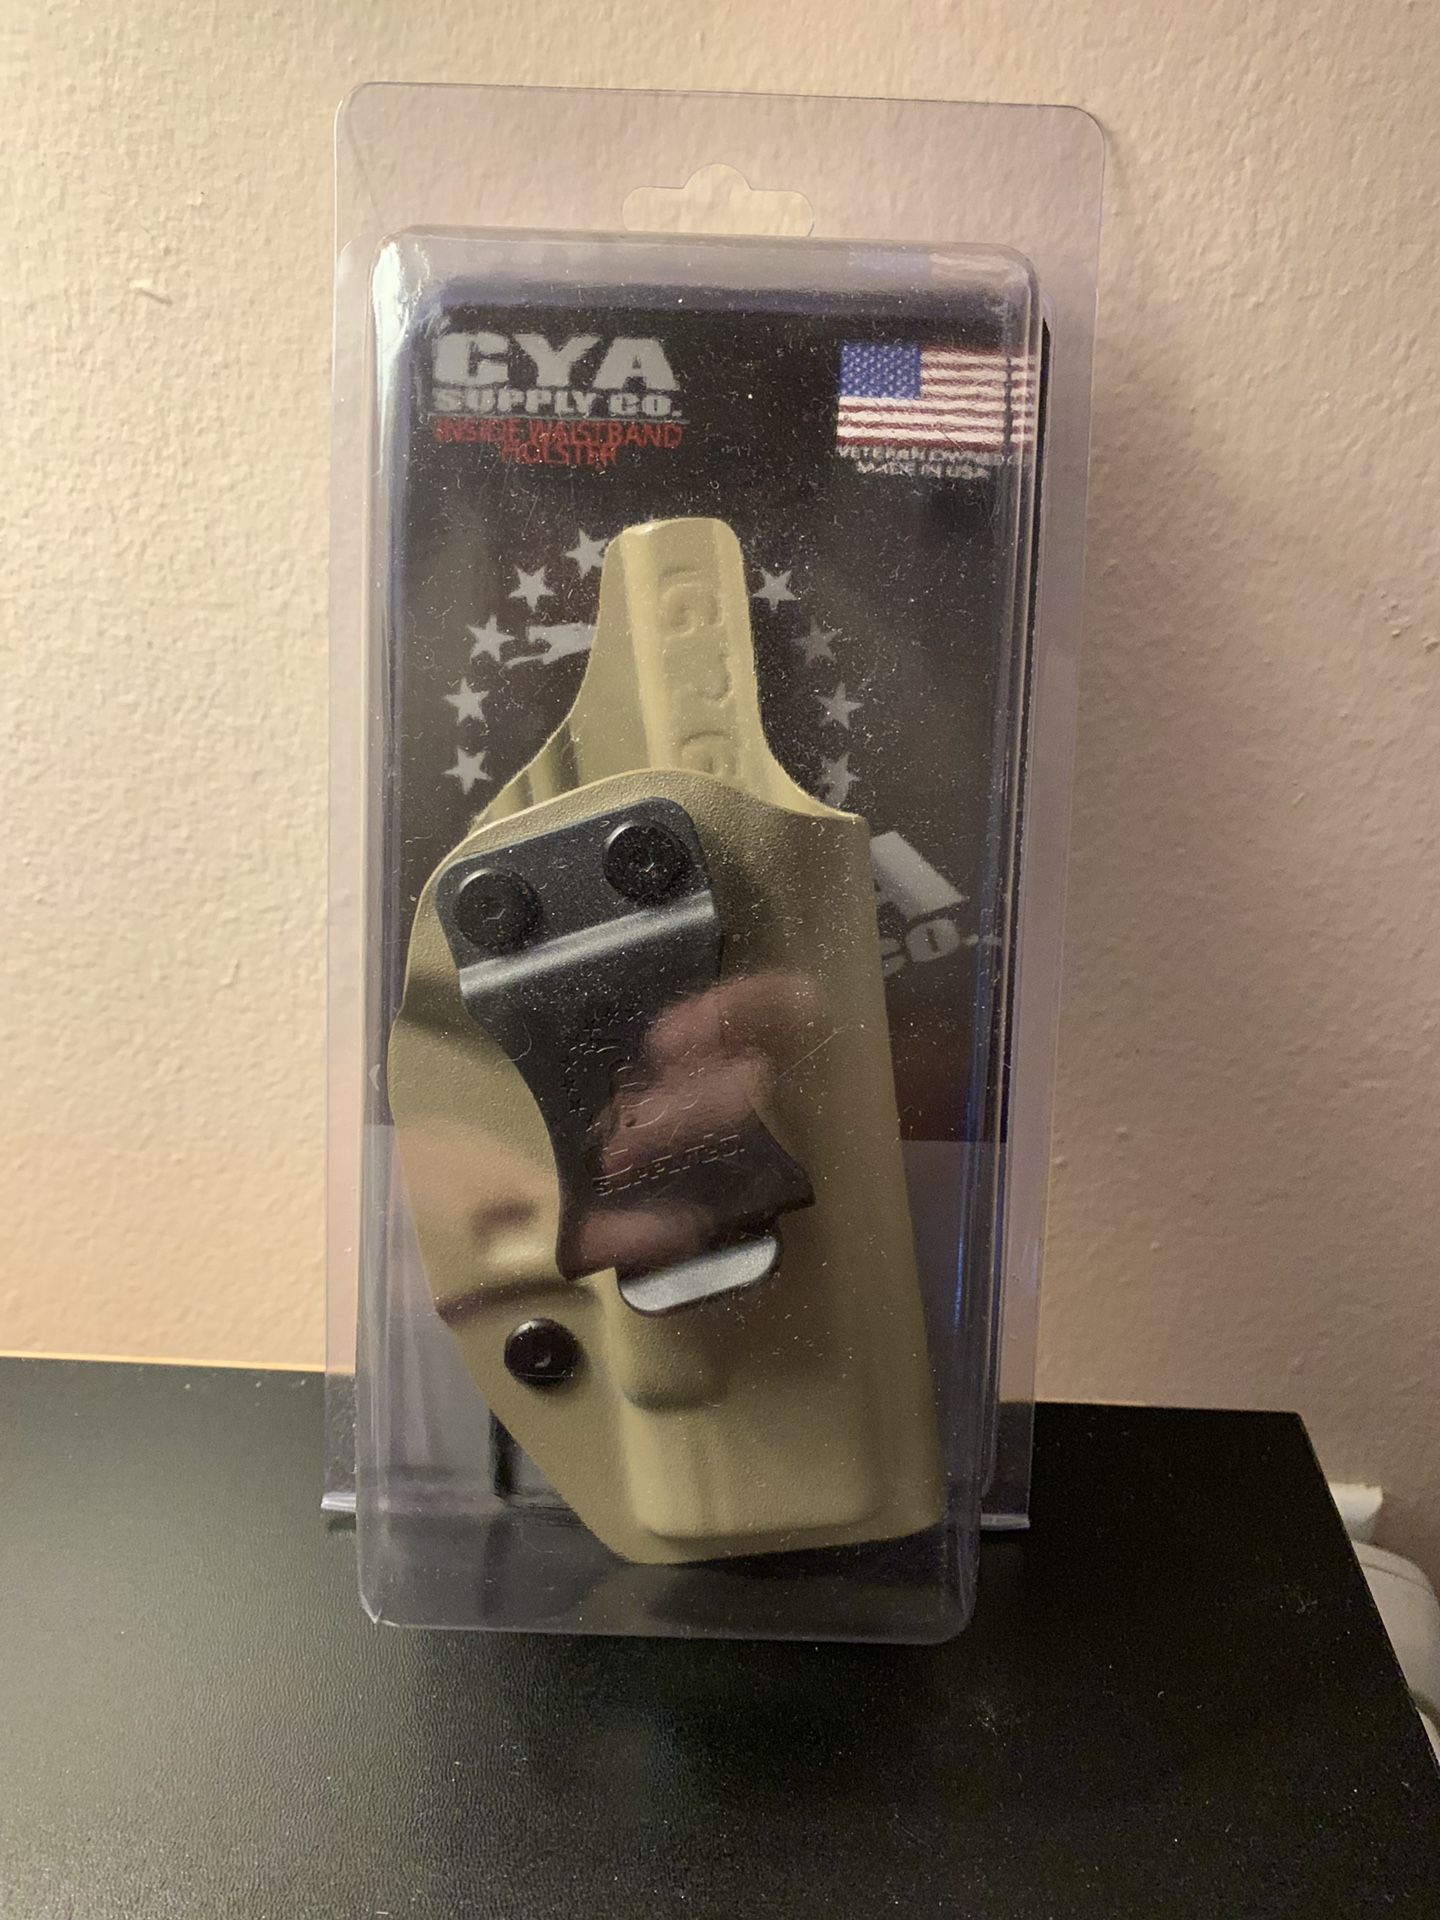 Glock 26 kydex holster CYA Supply Co.